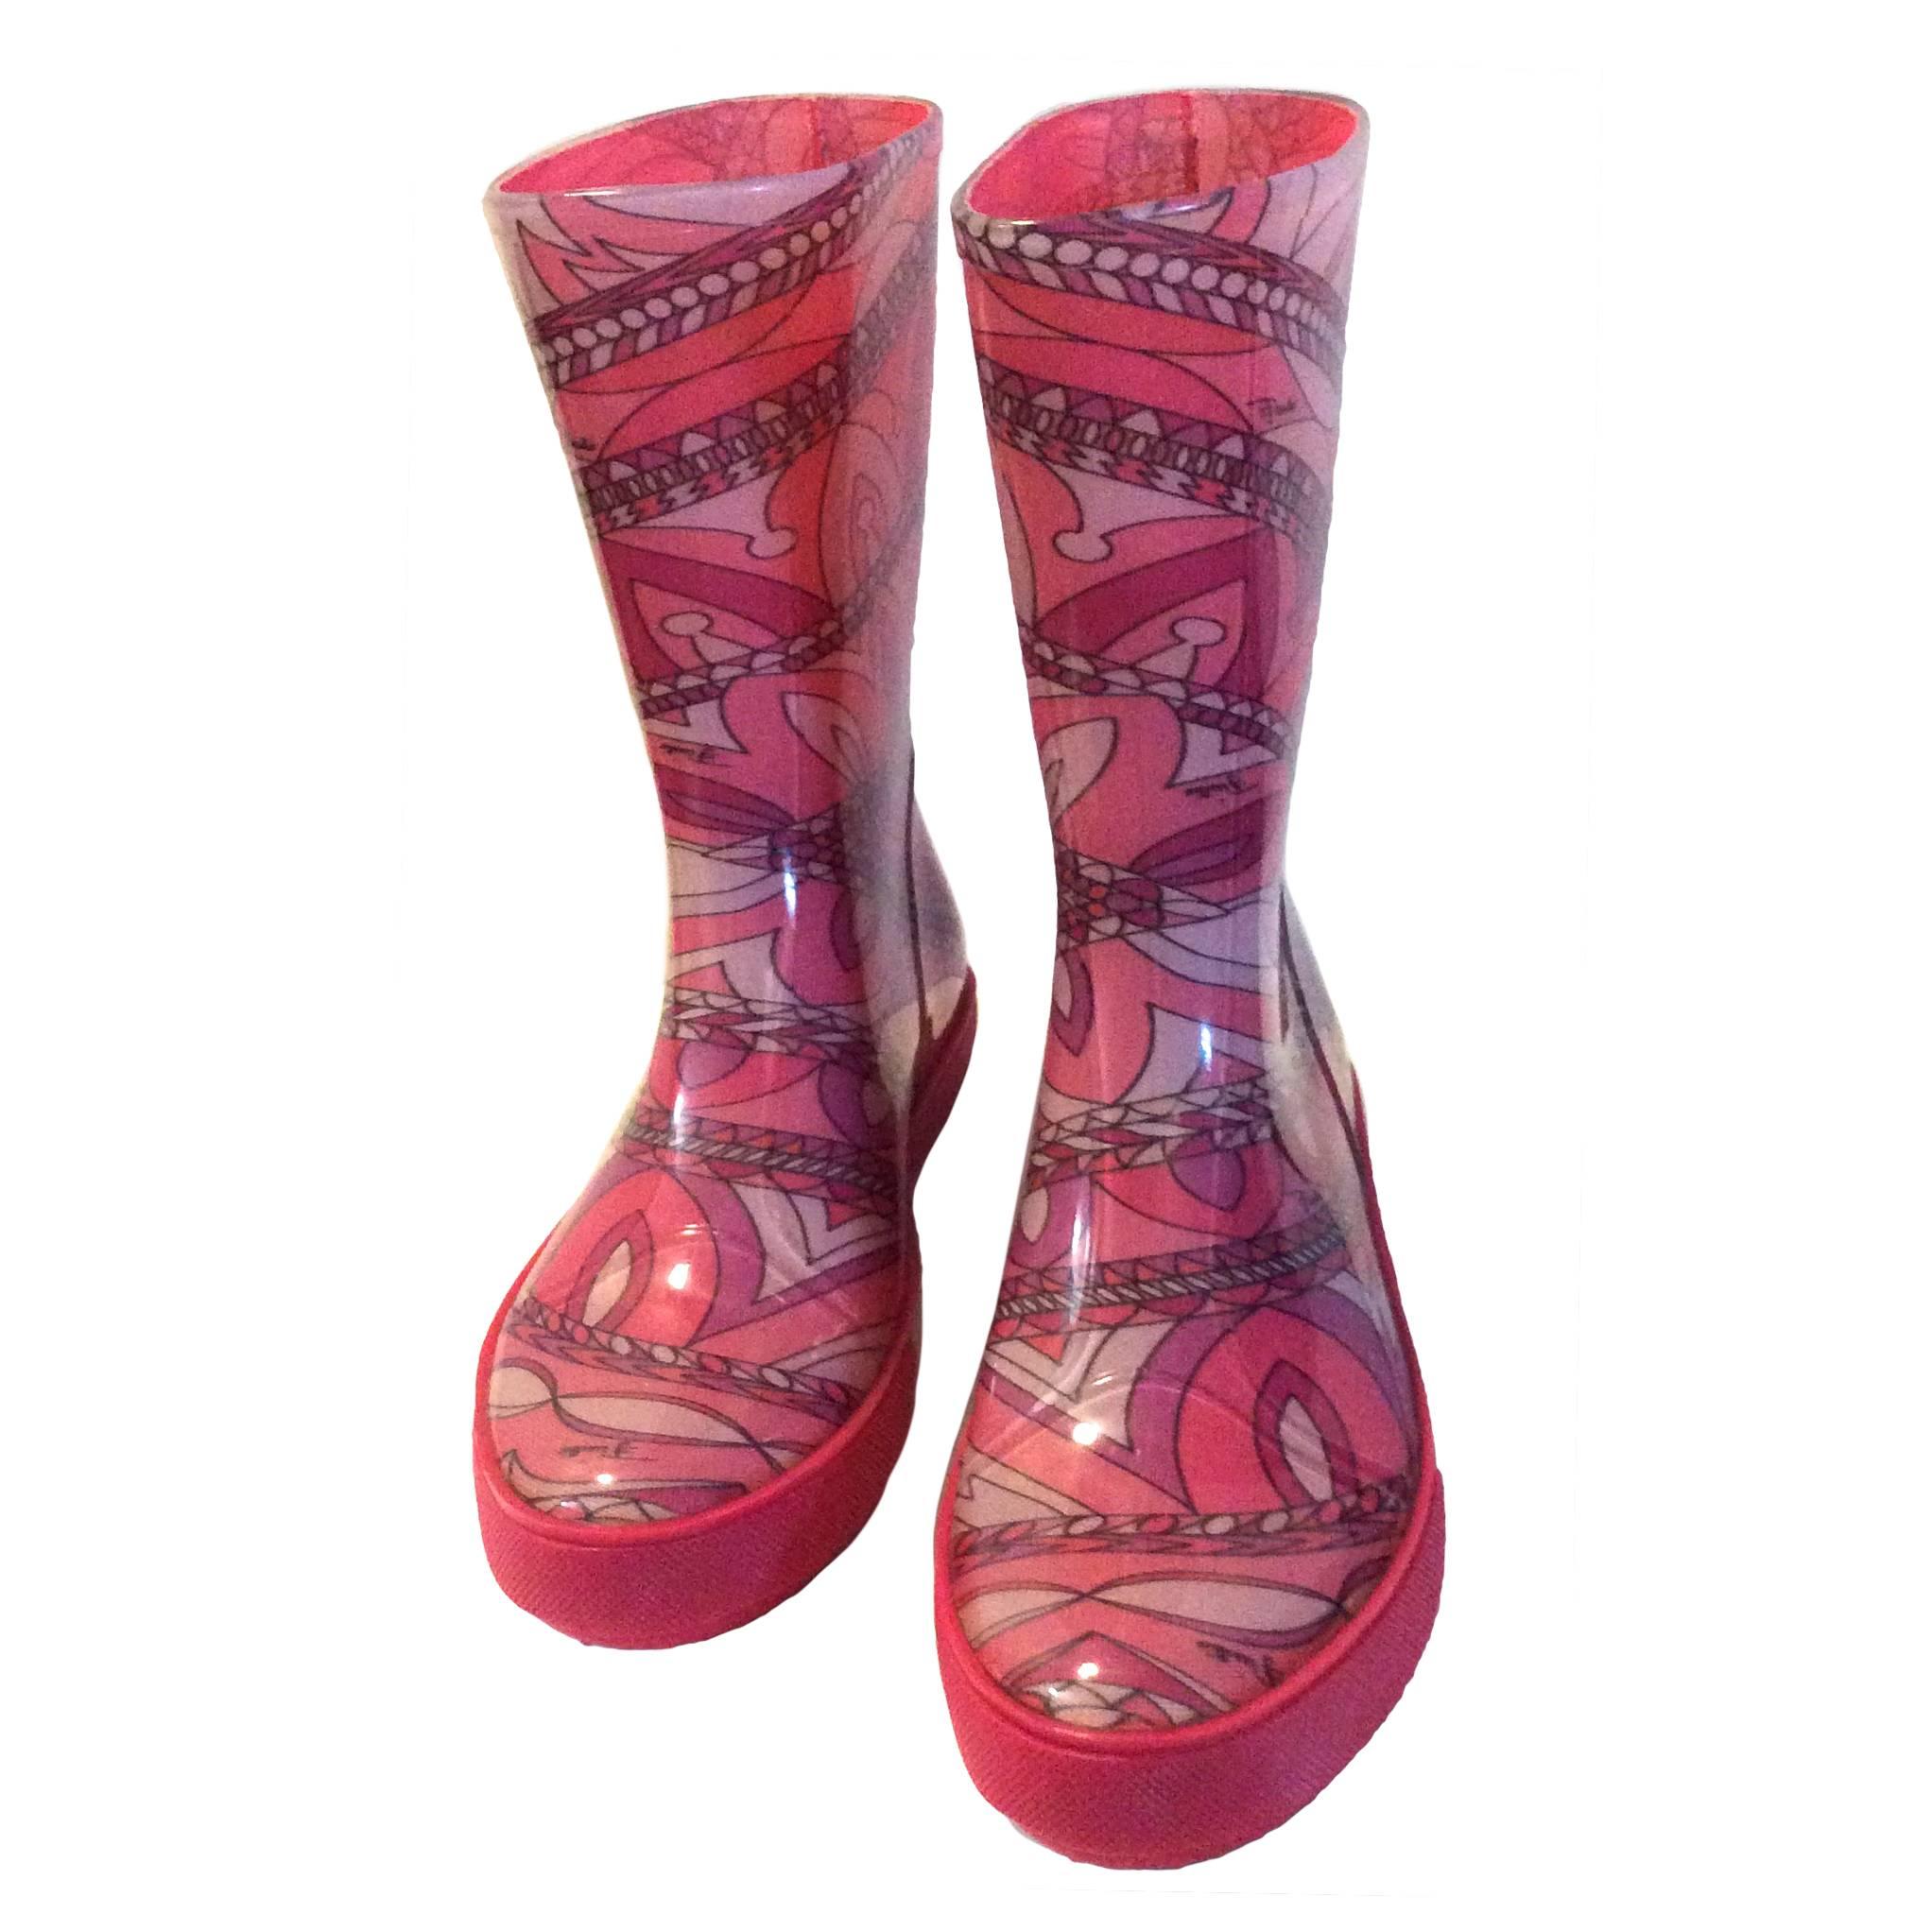 New Emilio Pucci Rain Boots - Size 37 or 38 For Sale